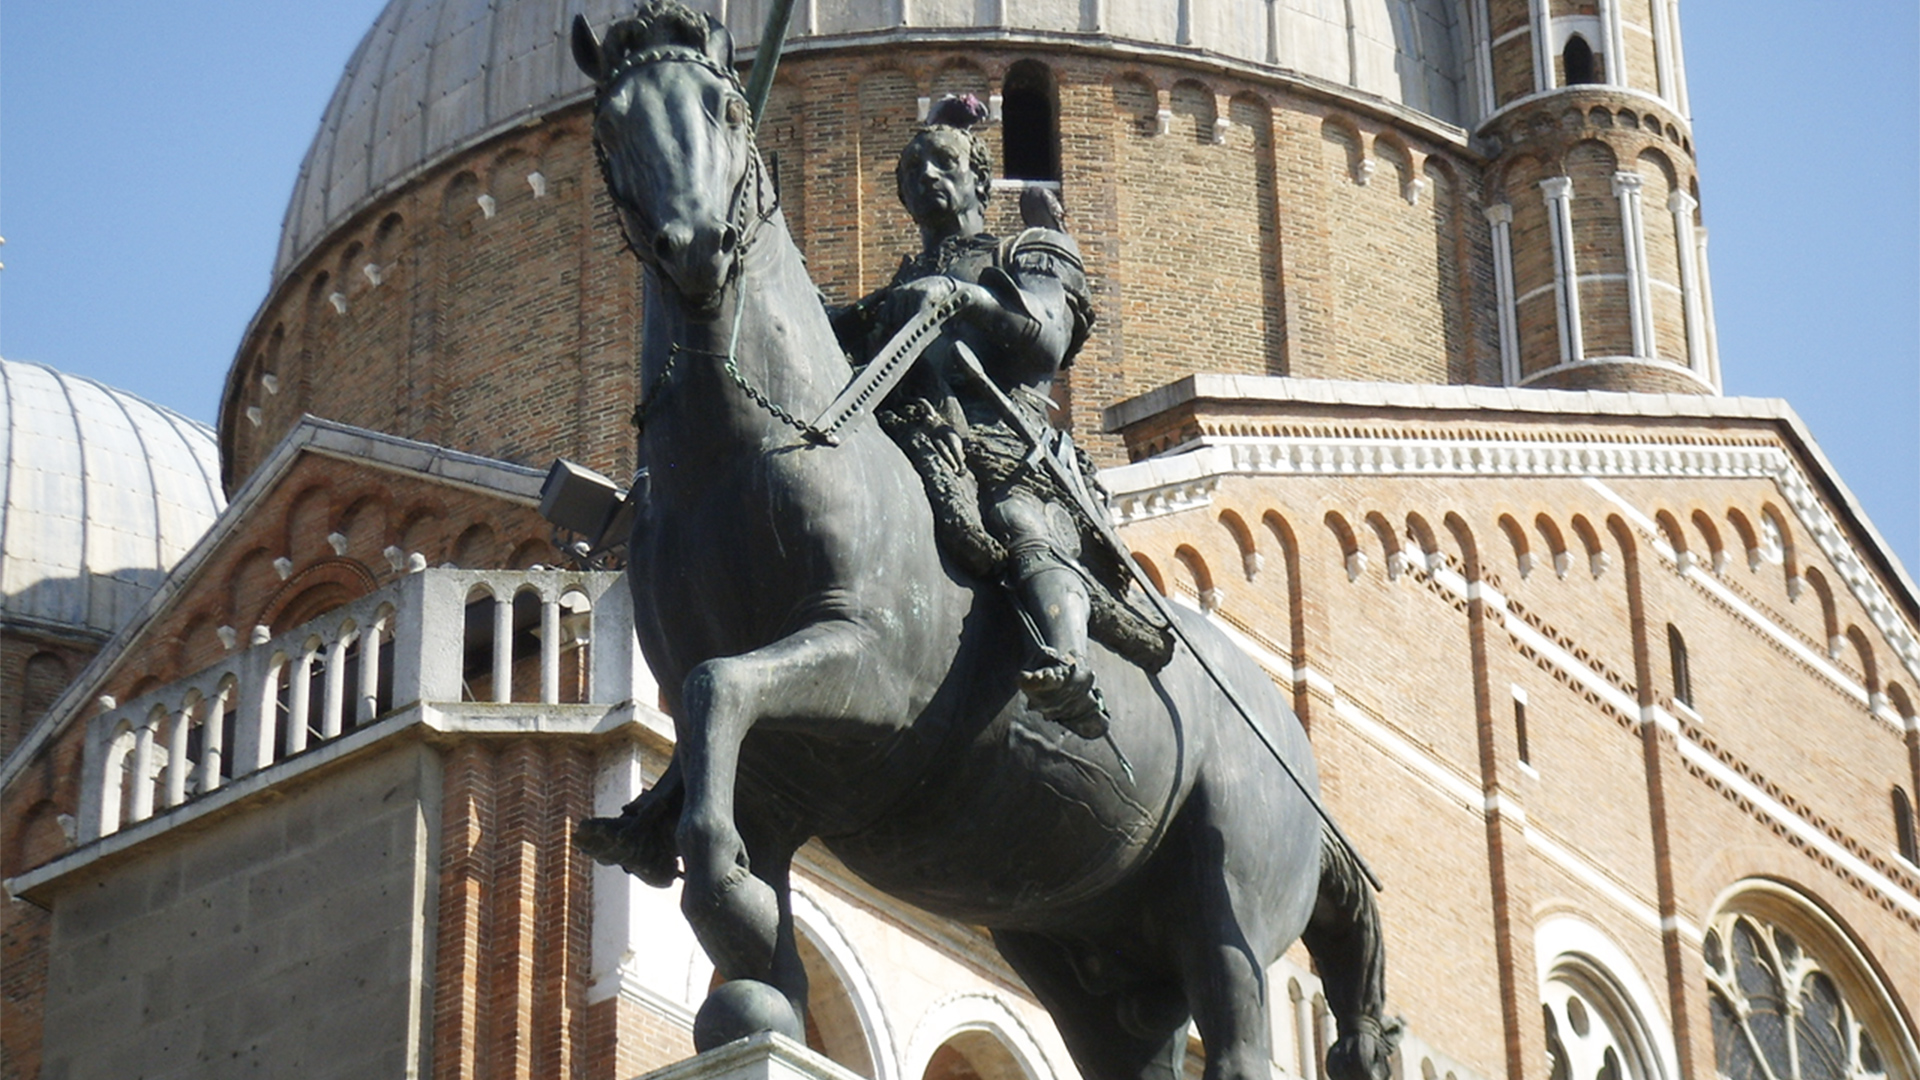 Statue of Gattamelata on a horse